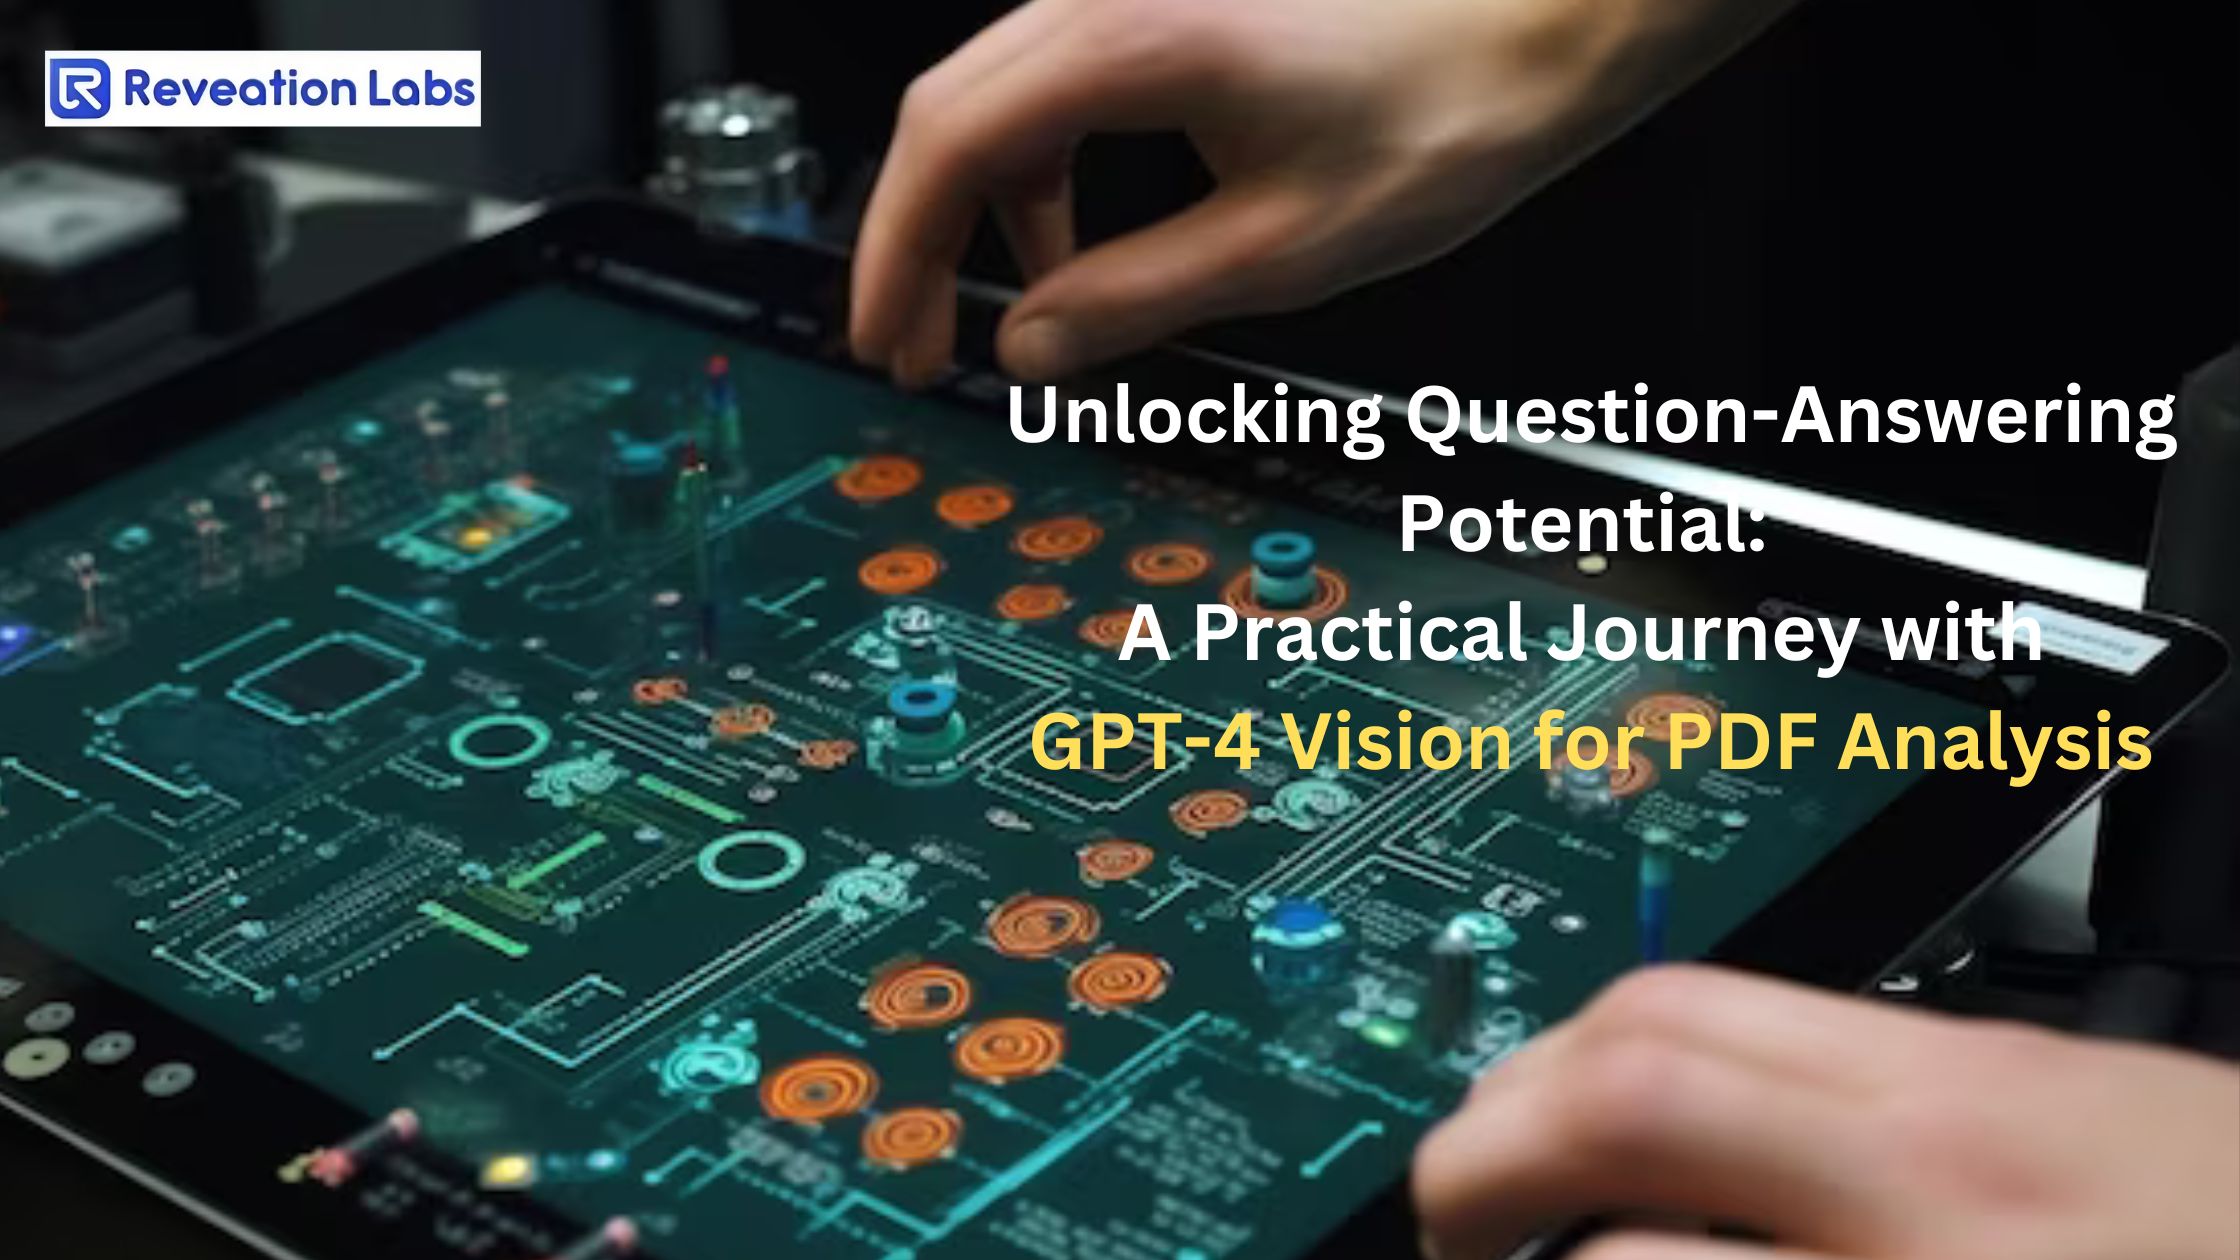  GPT-4 Vision for PDF Analysis